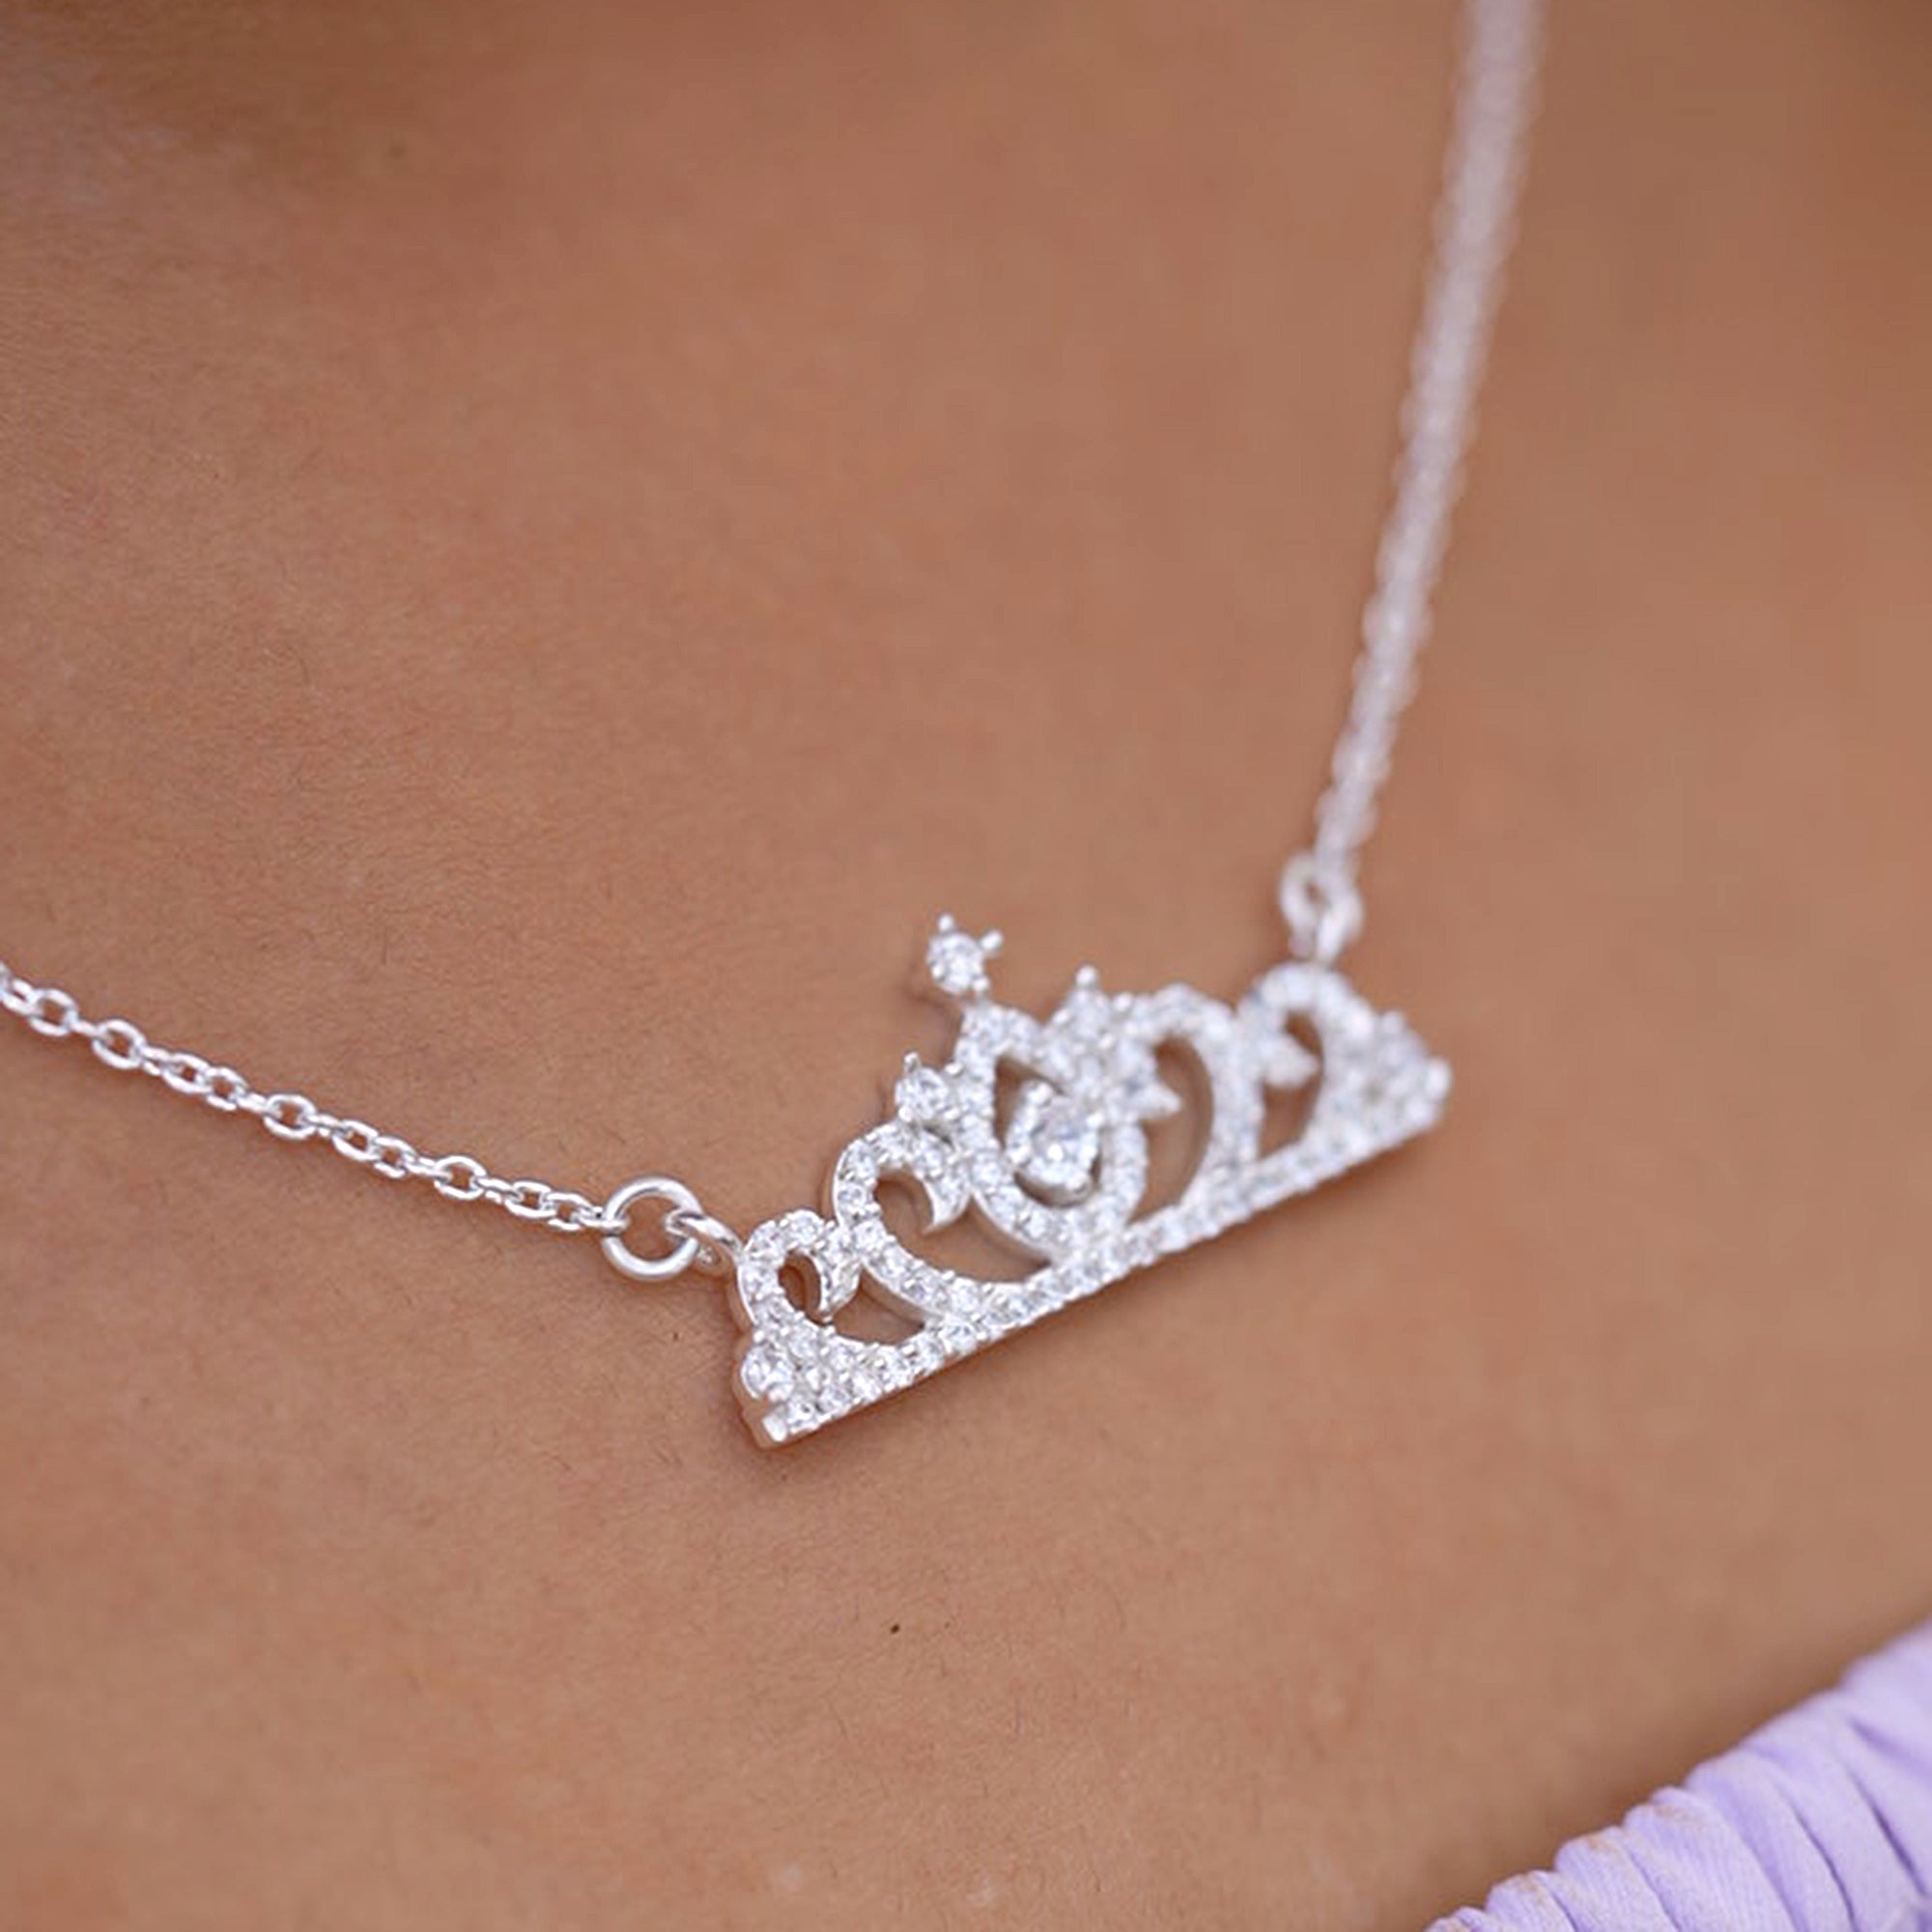 Princess Crown Design 925 Sterling Silver Pendant